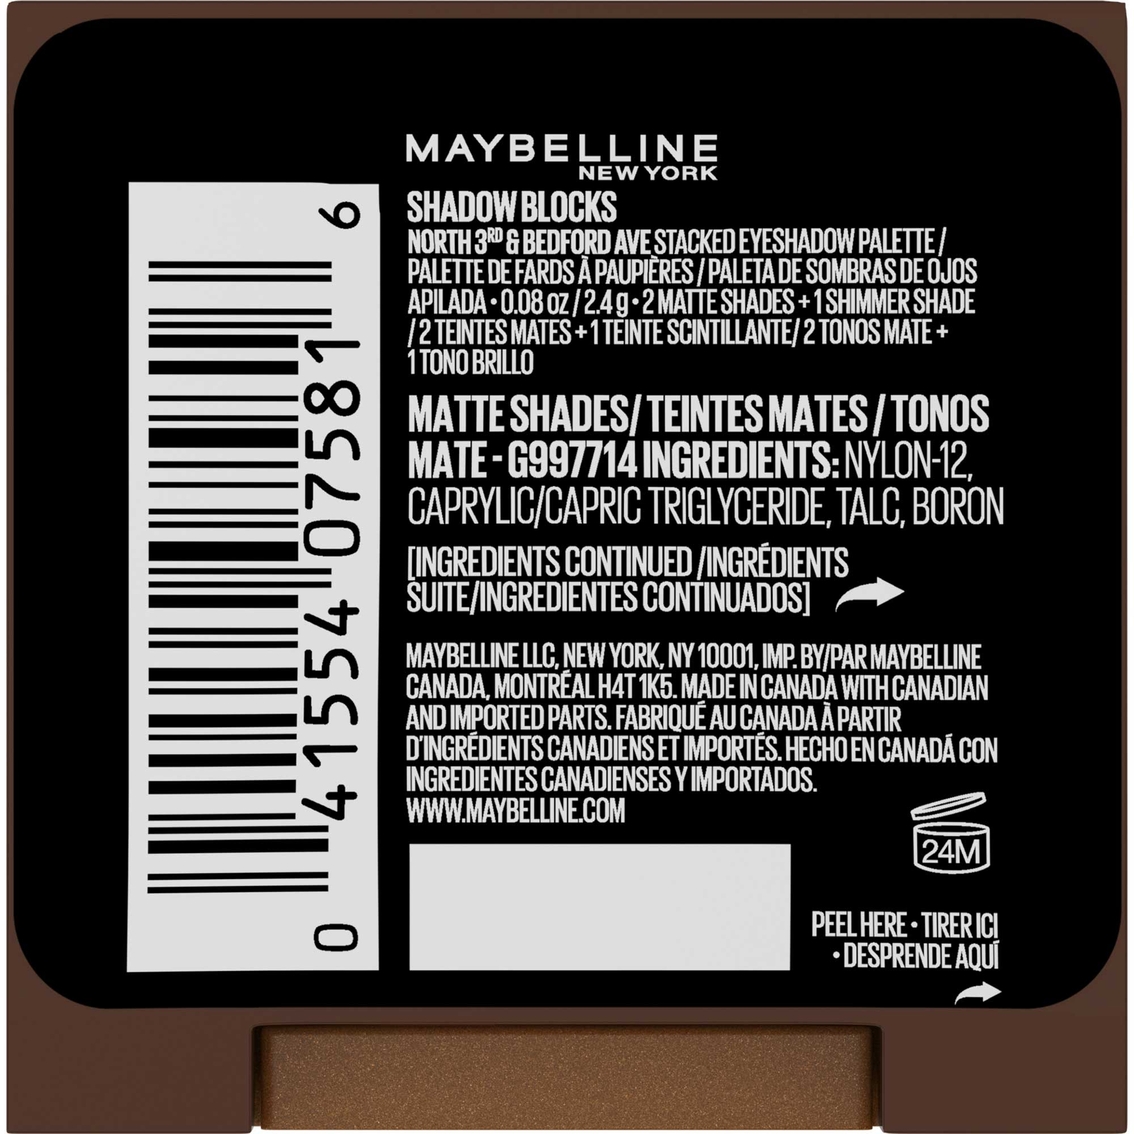 Maybelline Eye Shadow Blocks - Image 4 of 10